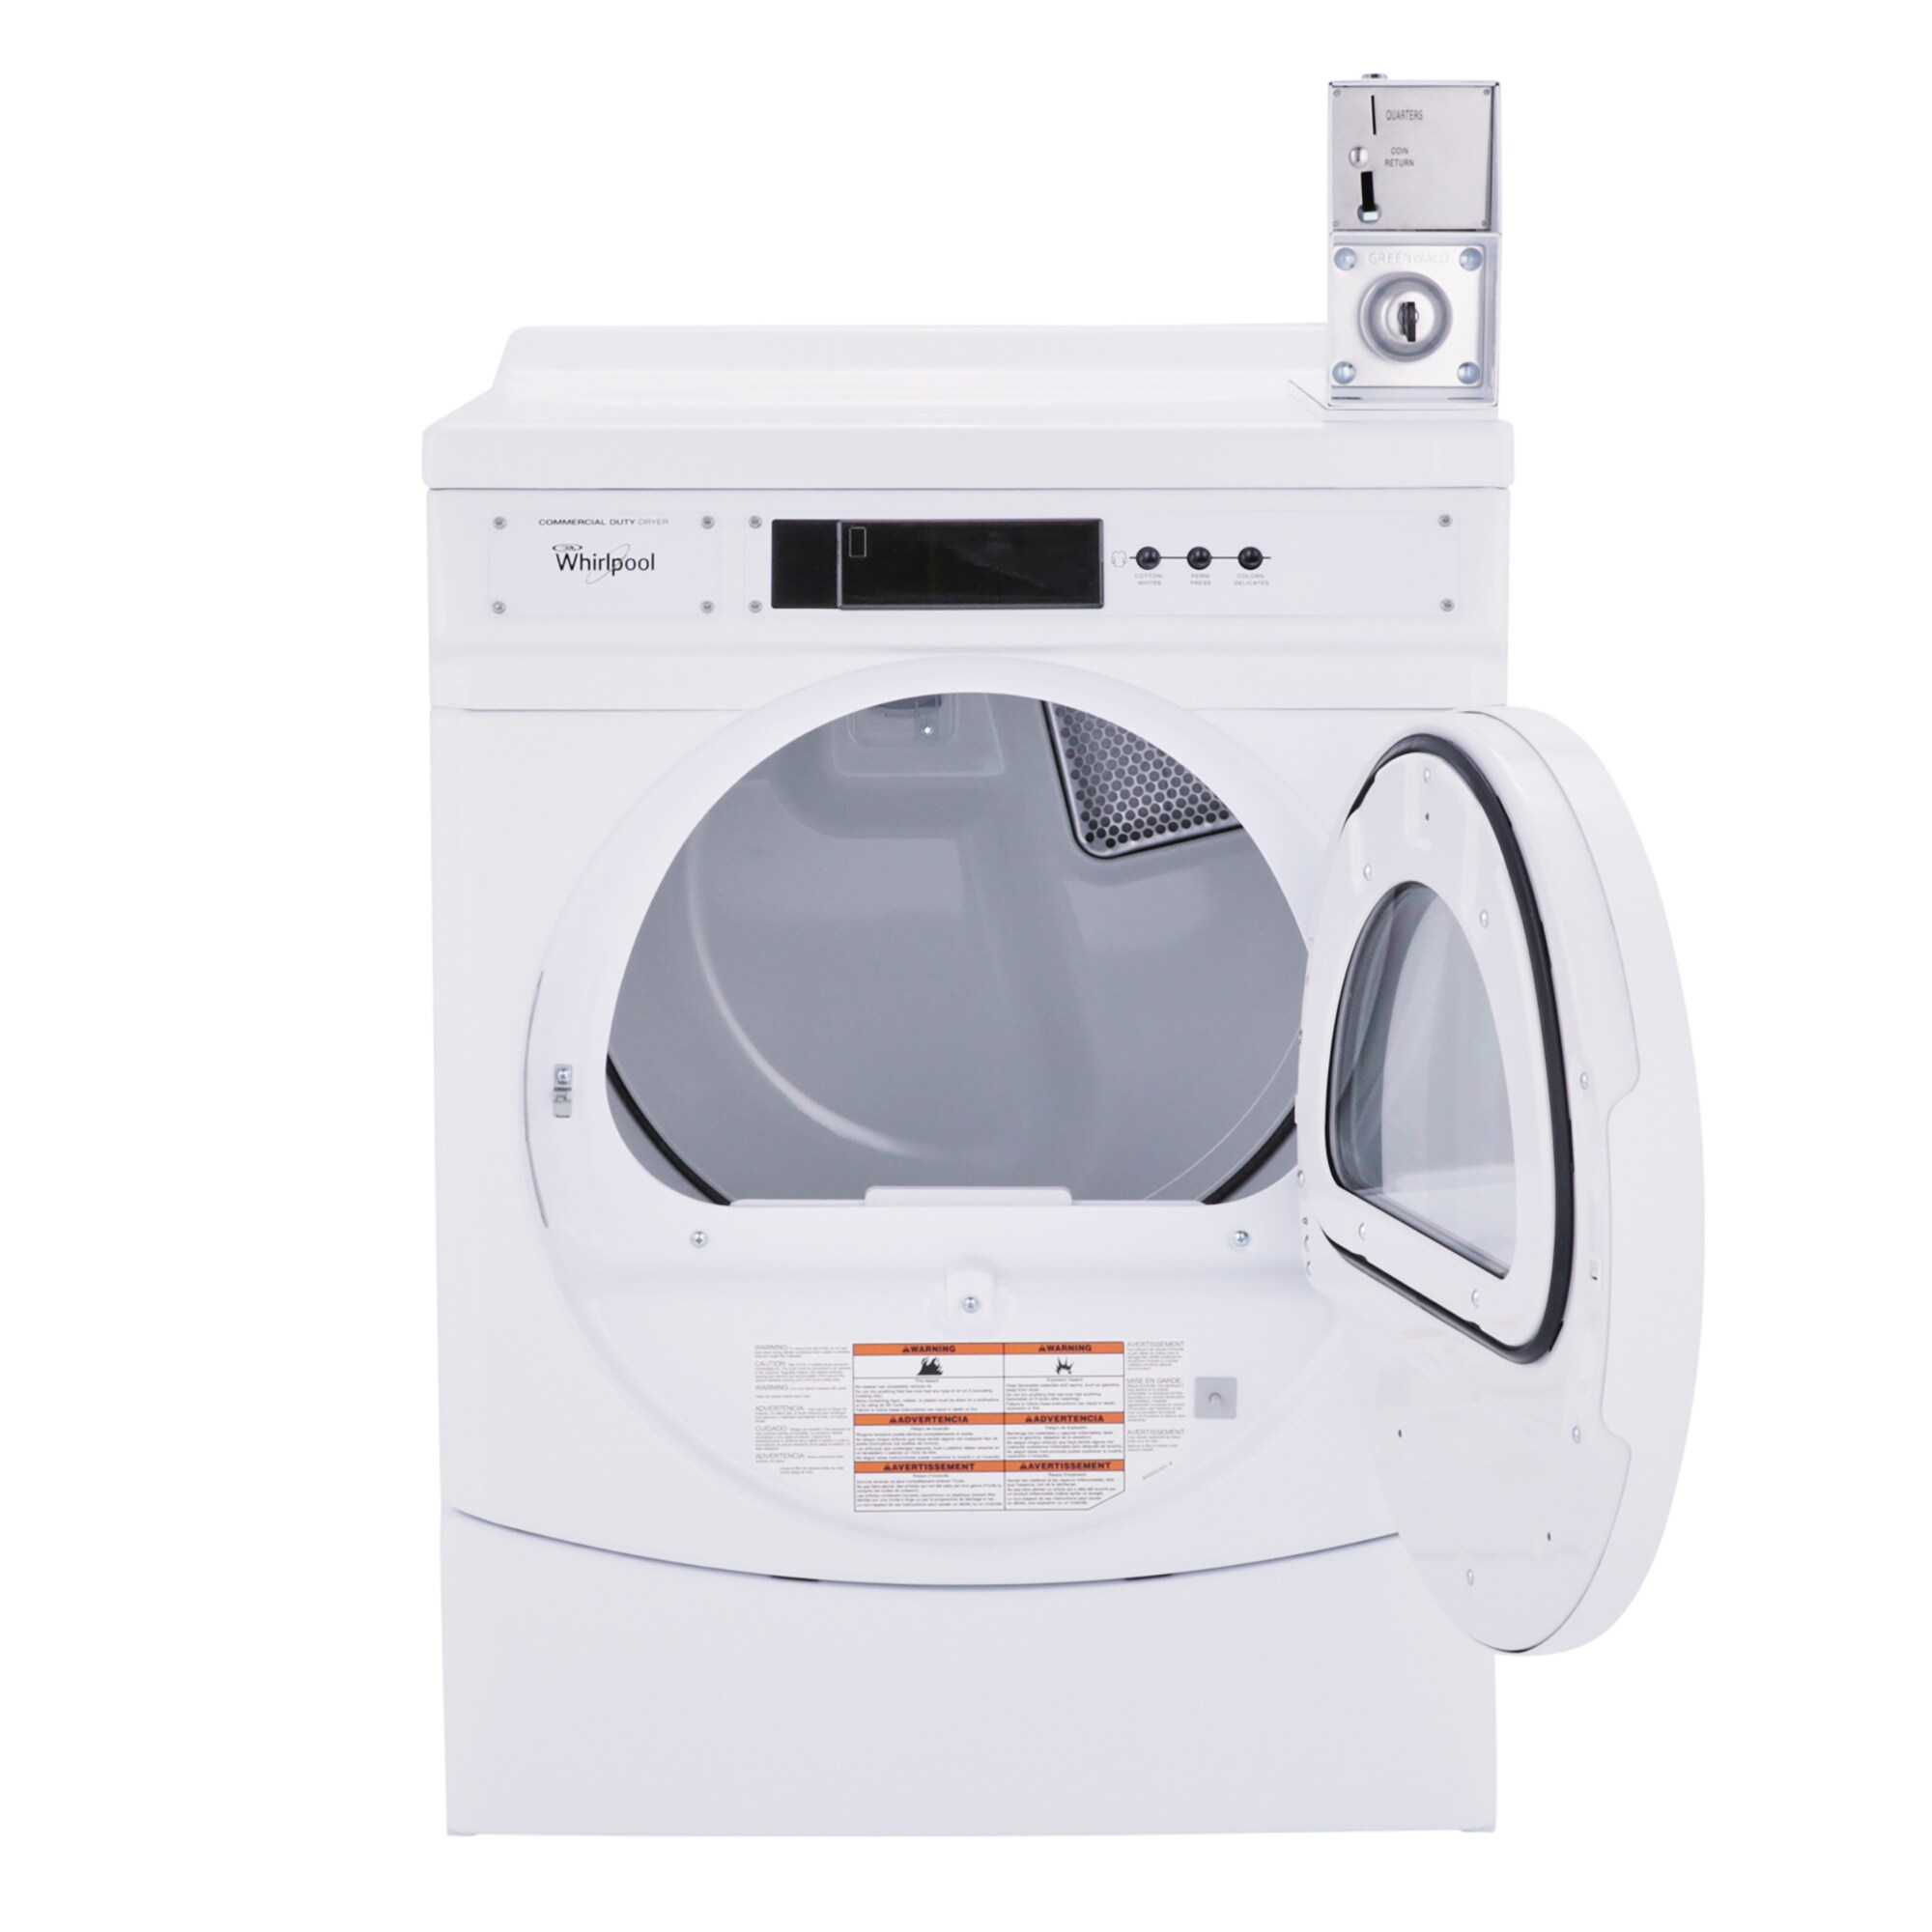 Used Whirlpool washing machine (white) “like new” - Appliances